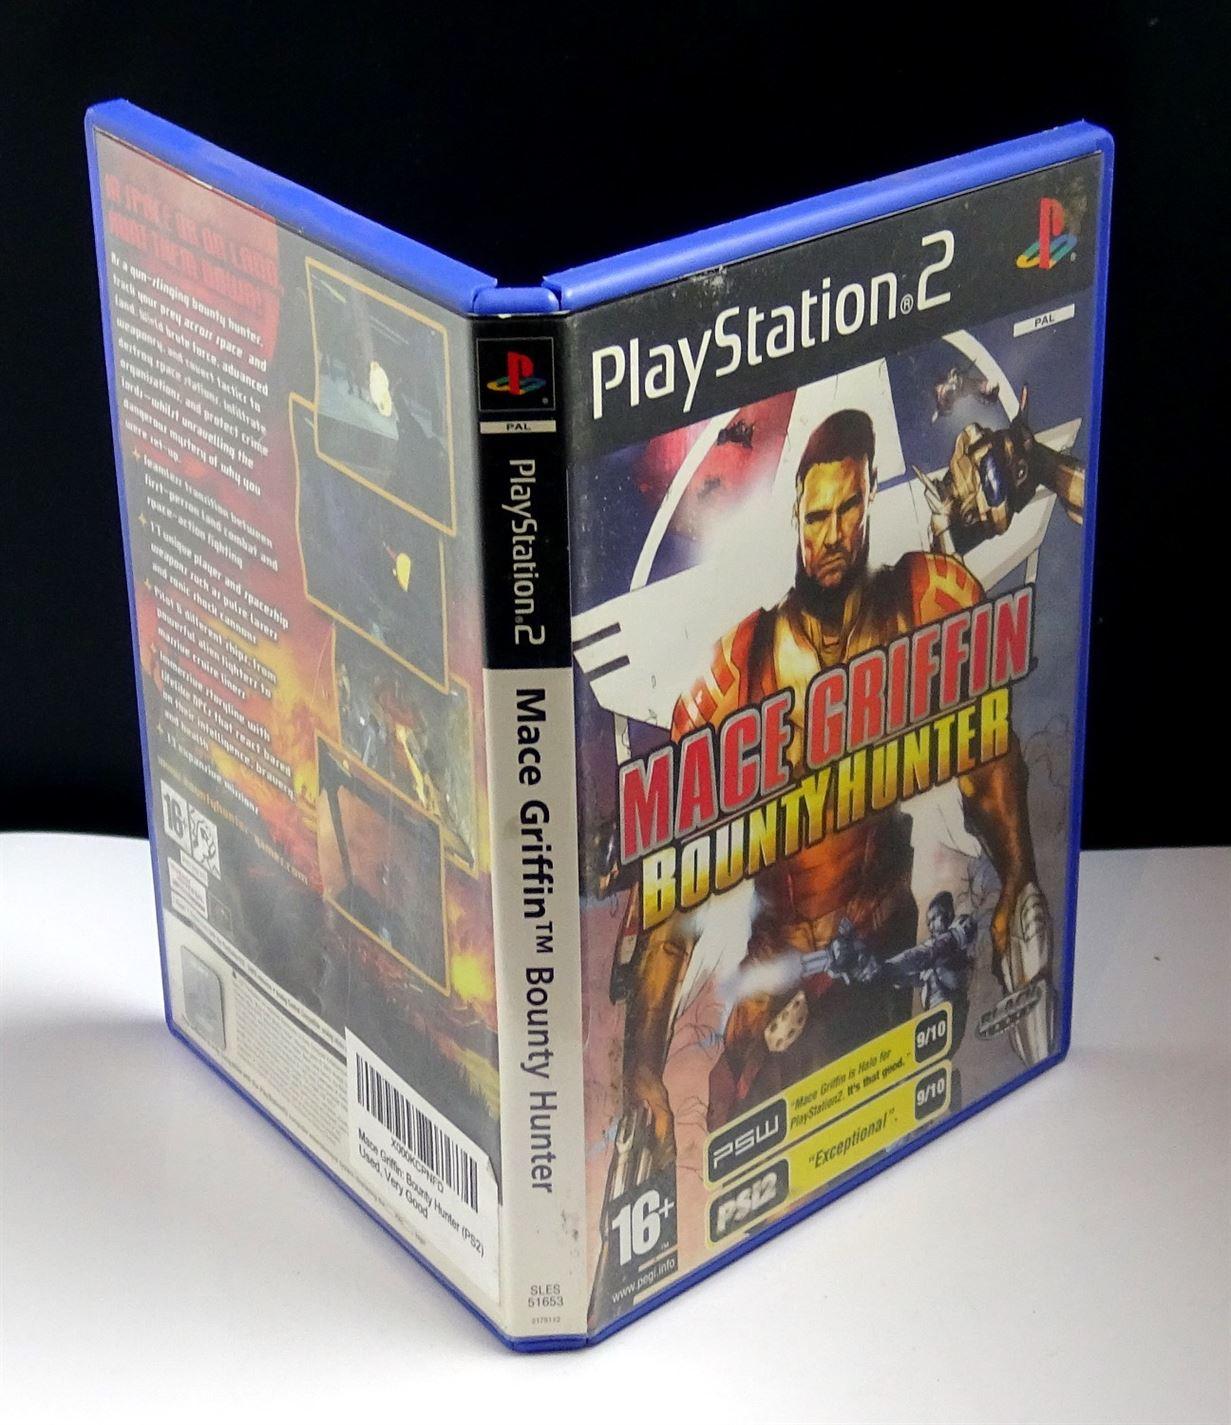 Mace Griffin: Bounty Hunter PS2 (PlayStation 2) - UK Seller